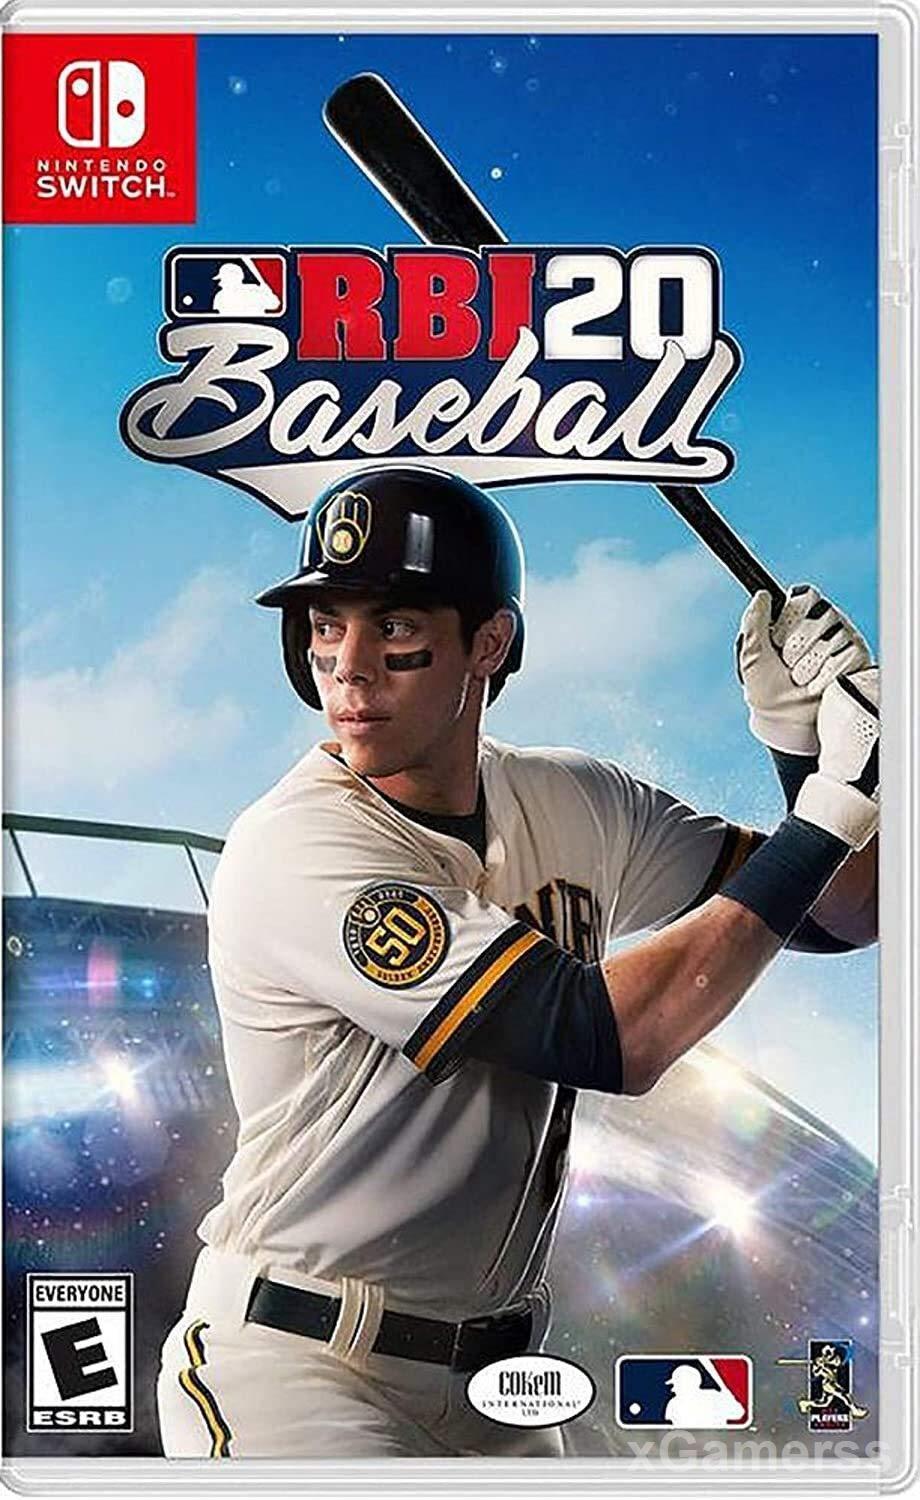 R.B.I Baseball 20 - one of the Best Games for Nintendo